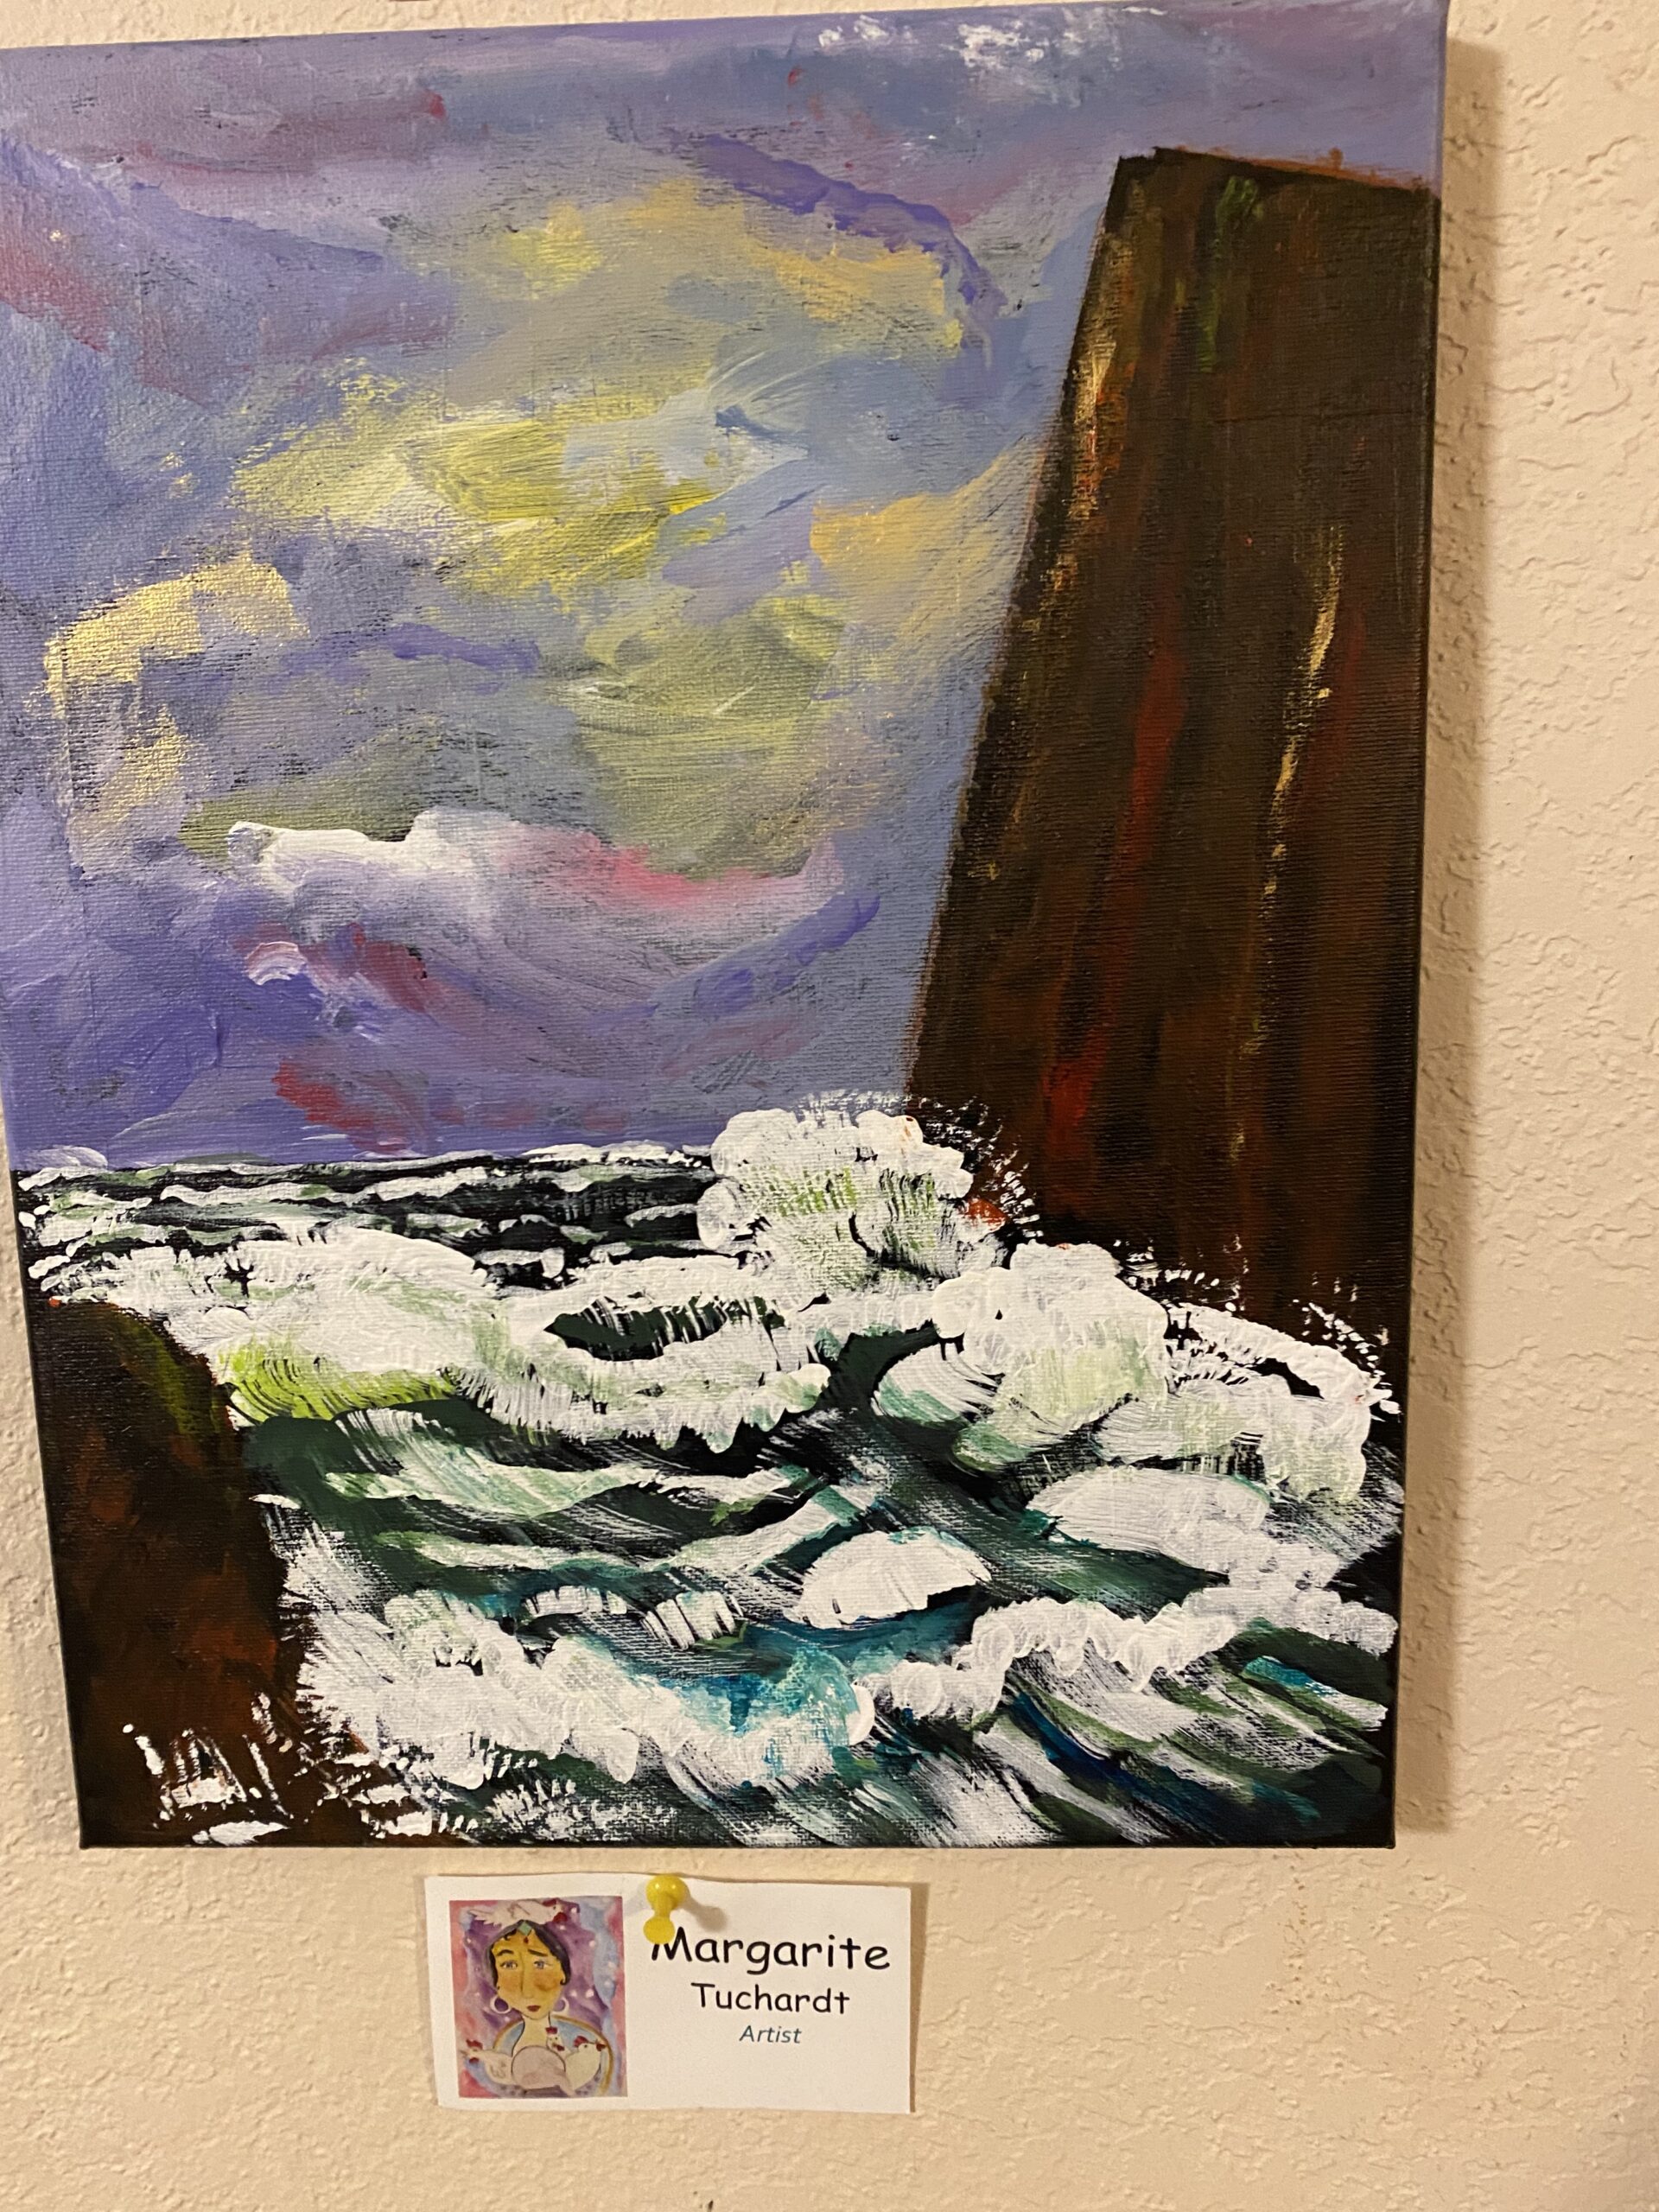 Margarite Tuchardt painting of turbulent sea